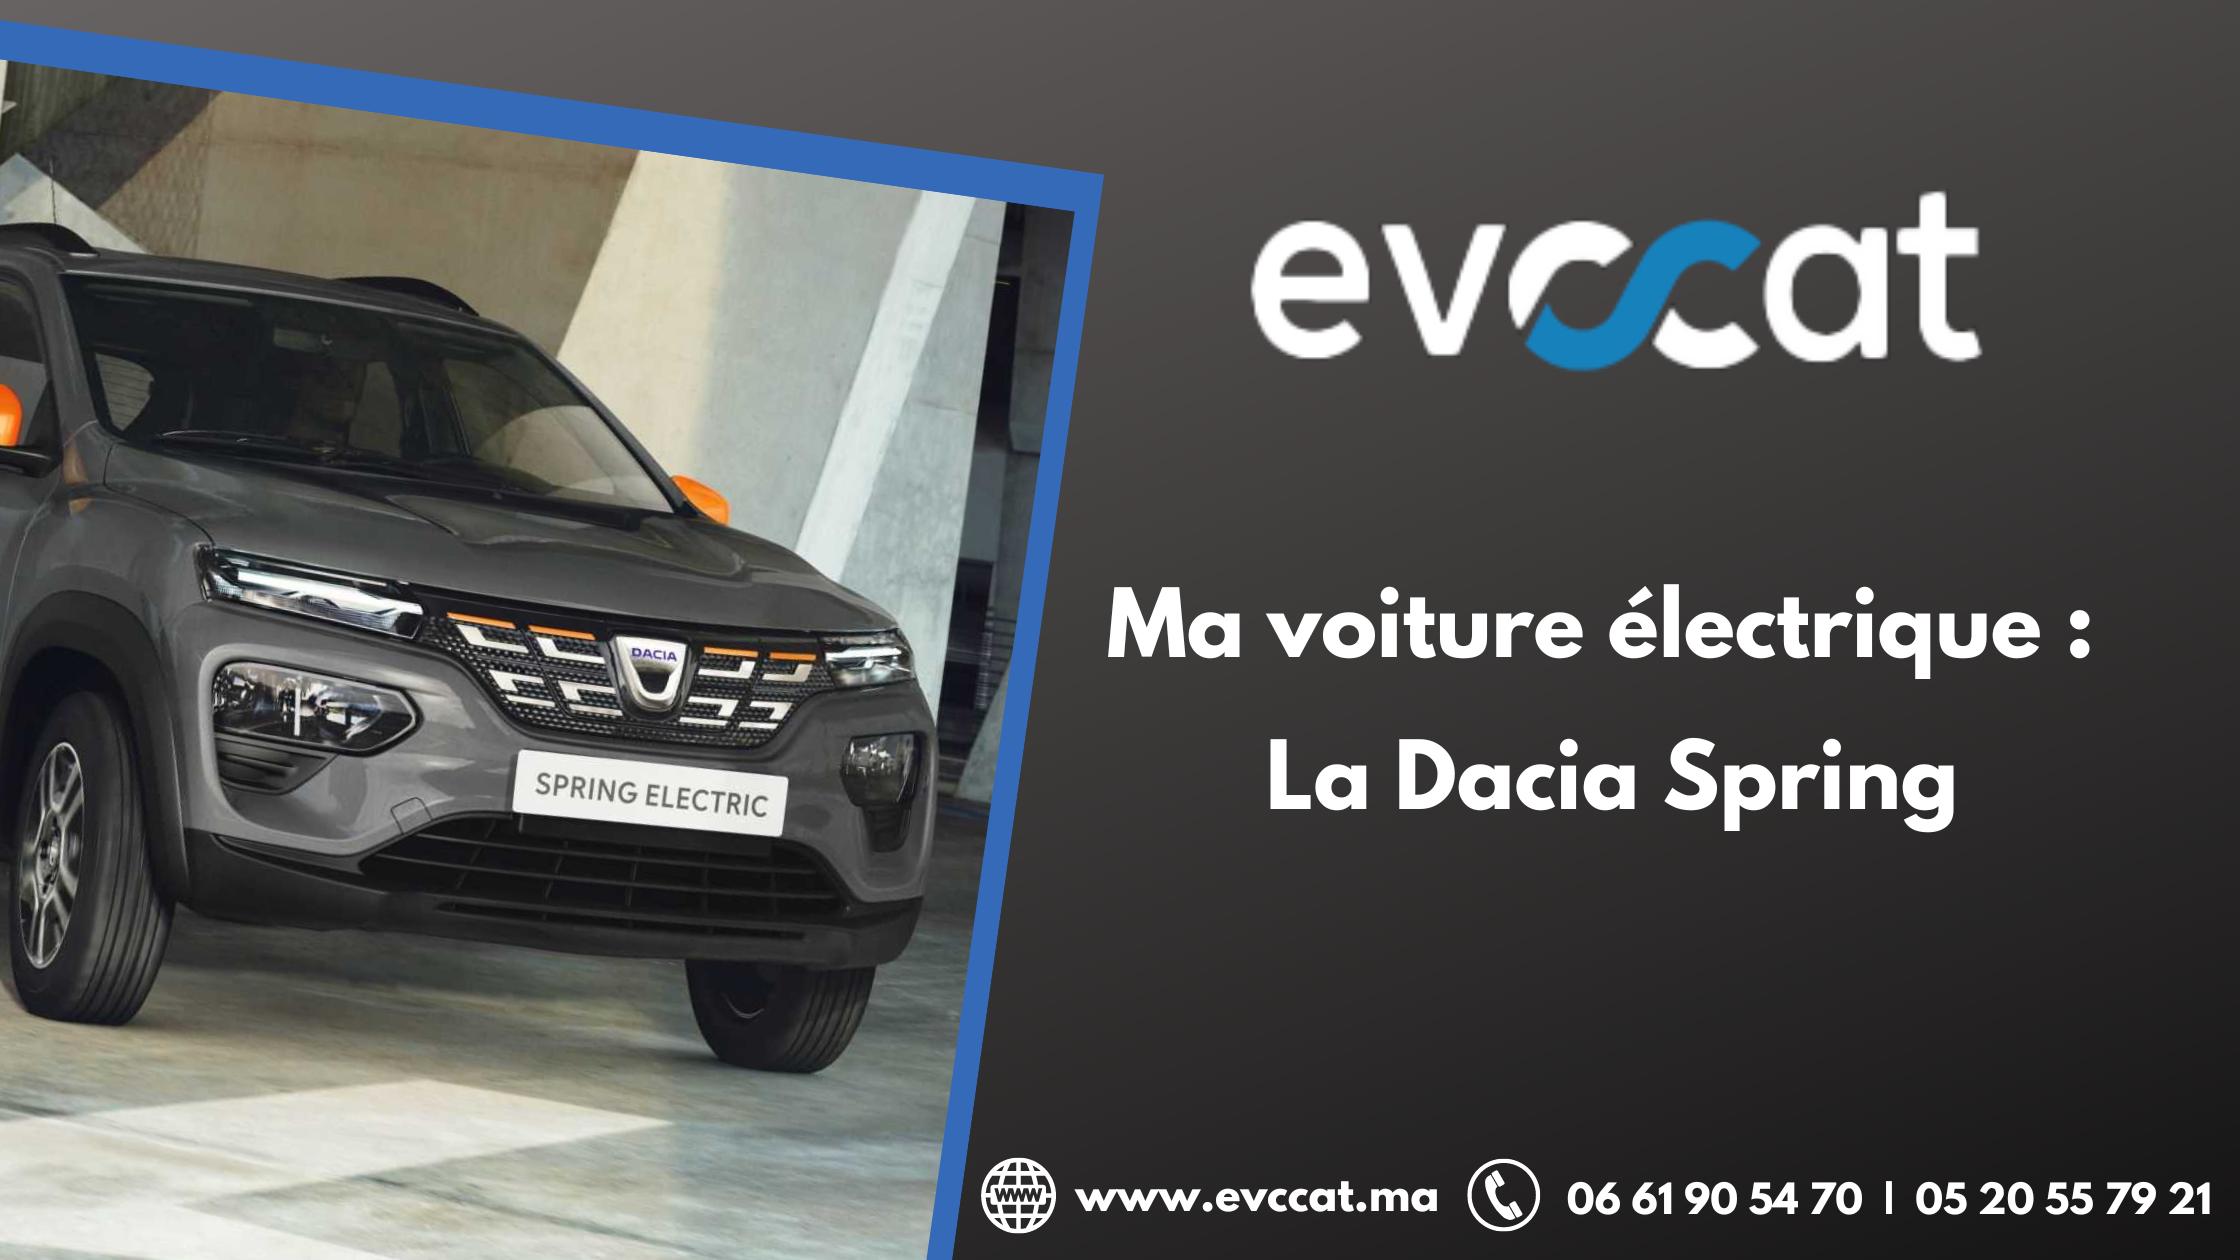 Borne de recharge Evccat Maroc Dacia Spring